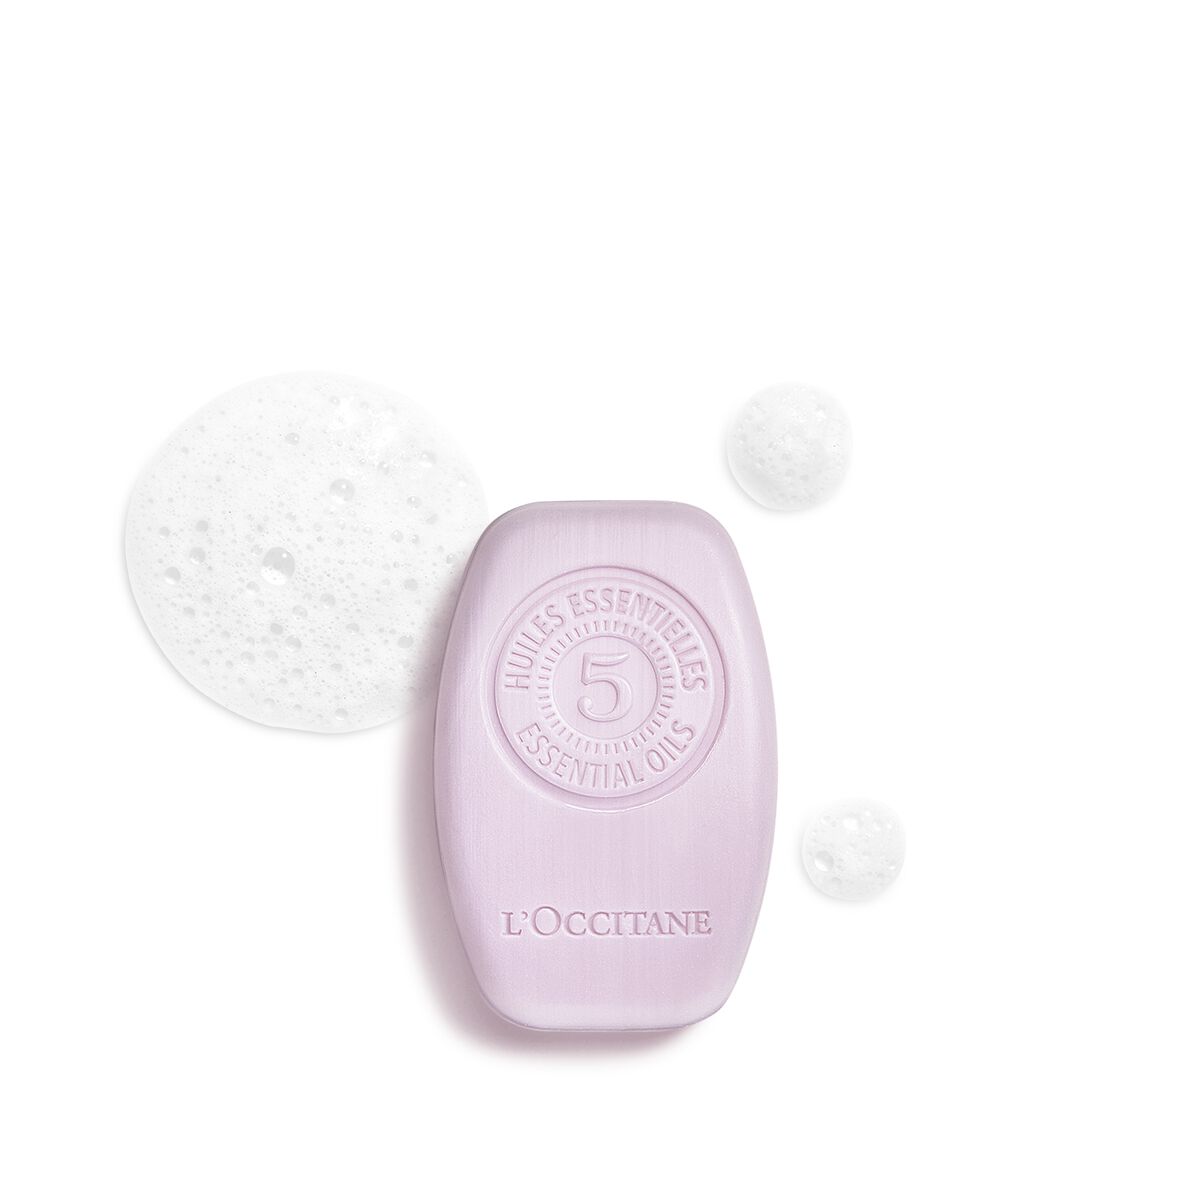 L'occitane Gentle & Balance Solid Shampoo 2.1 Fl oz